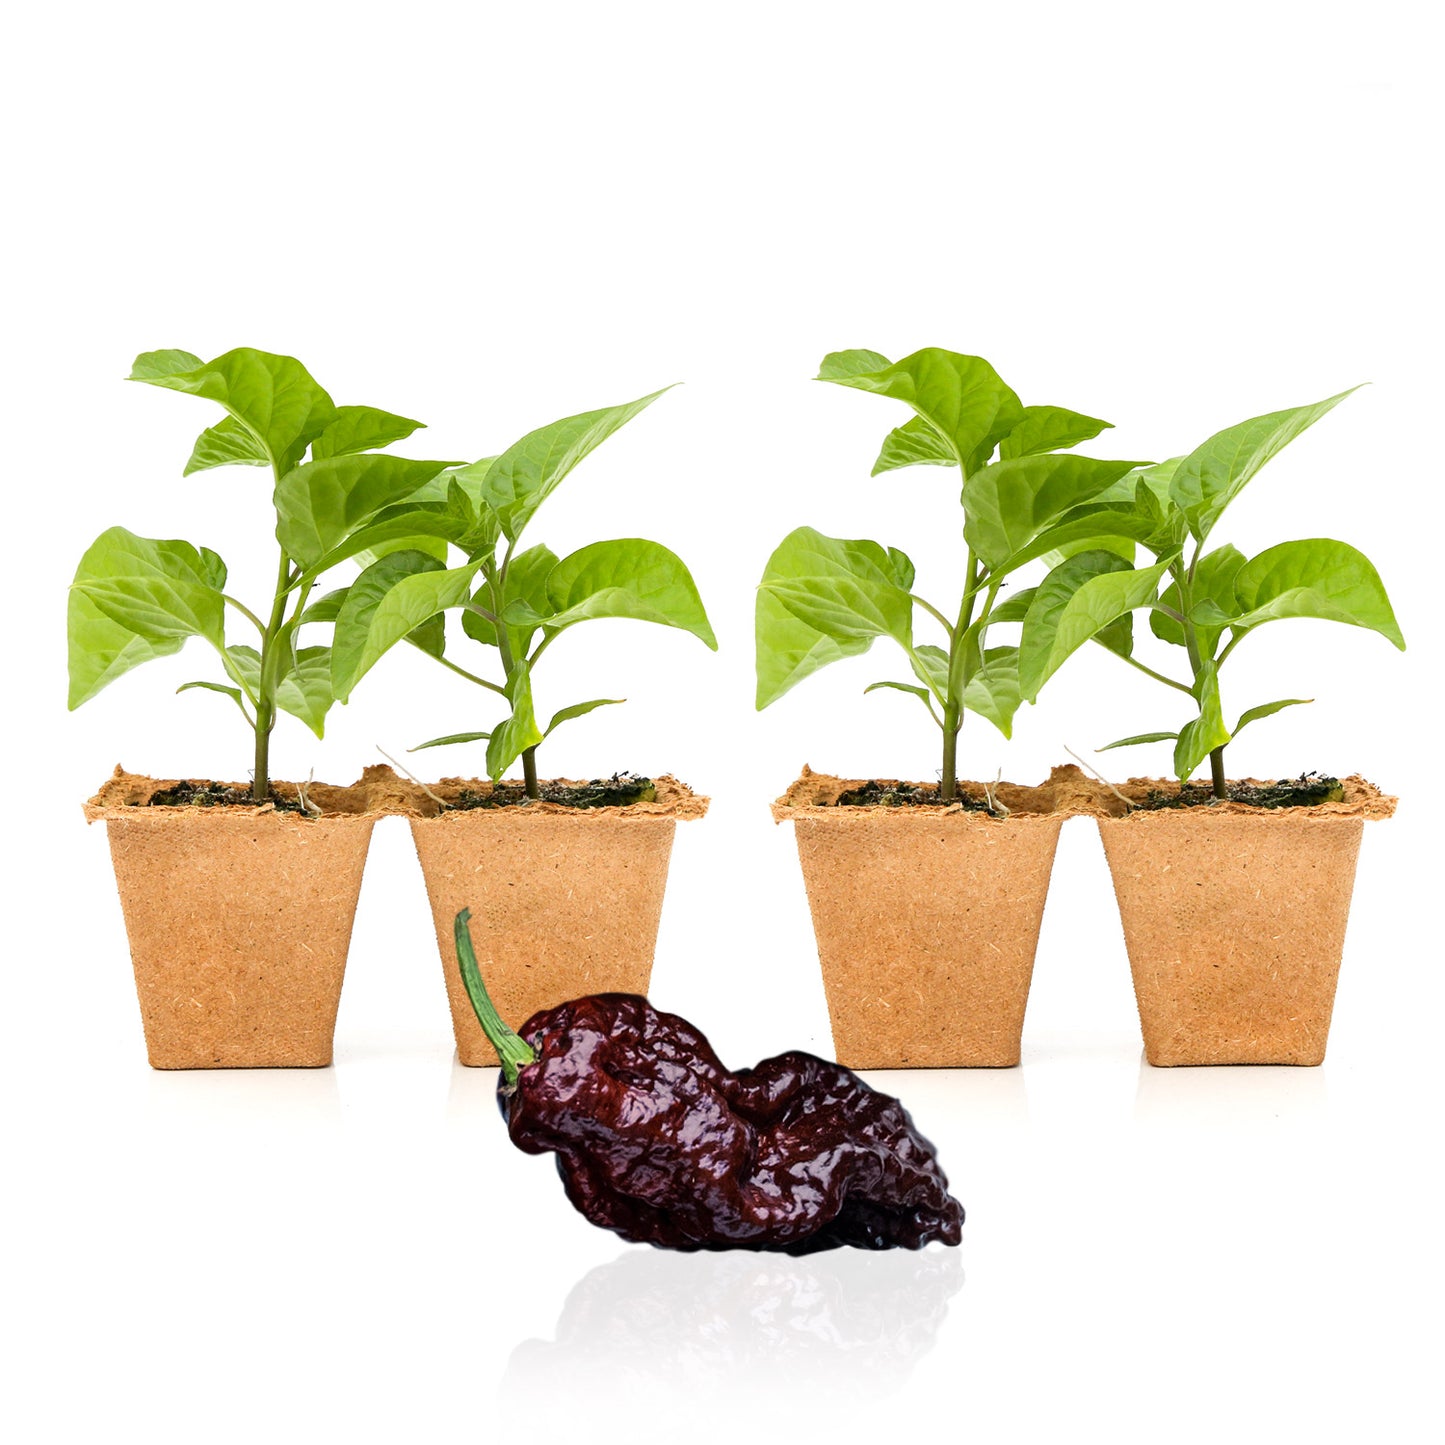 Pepper Joe's Chocolate reaper pepper plants for sale